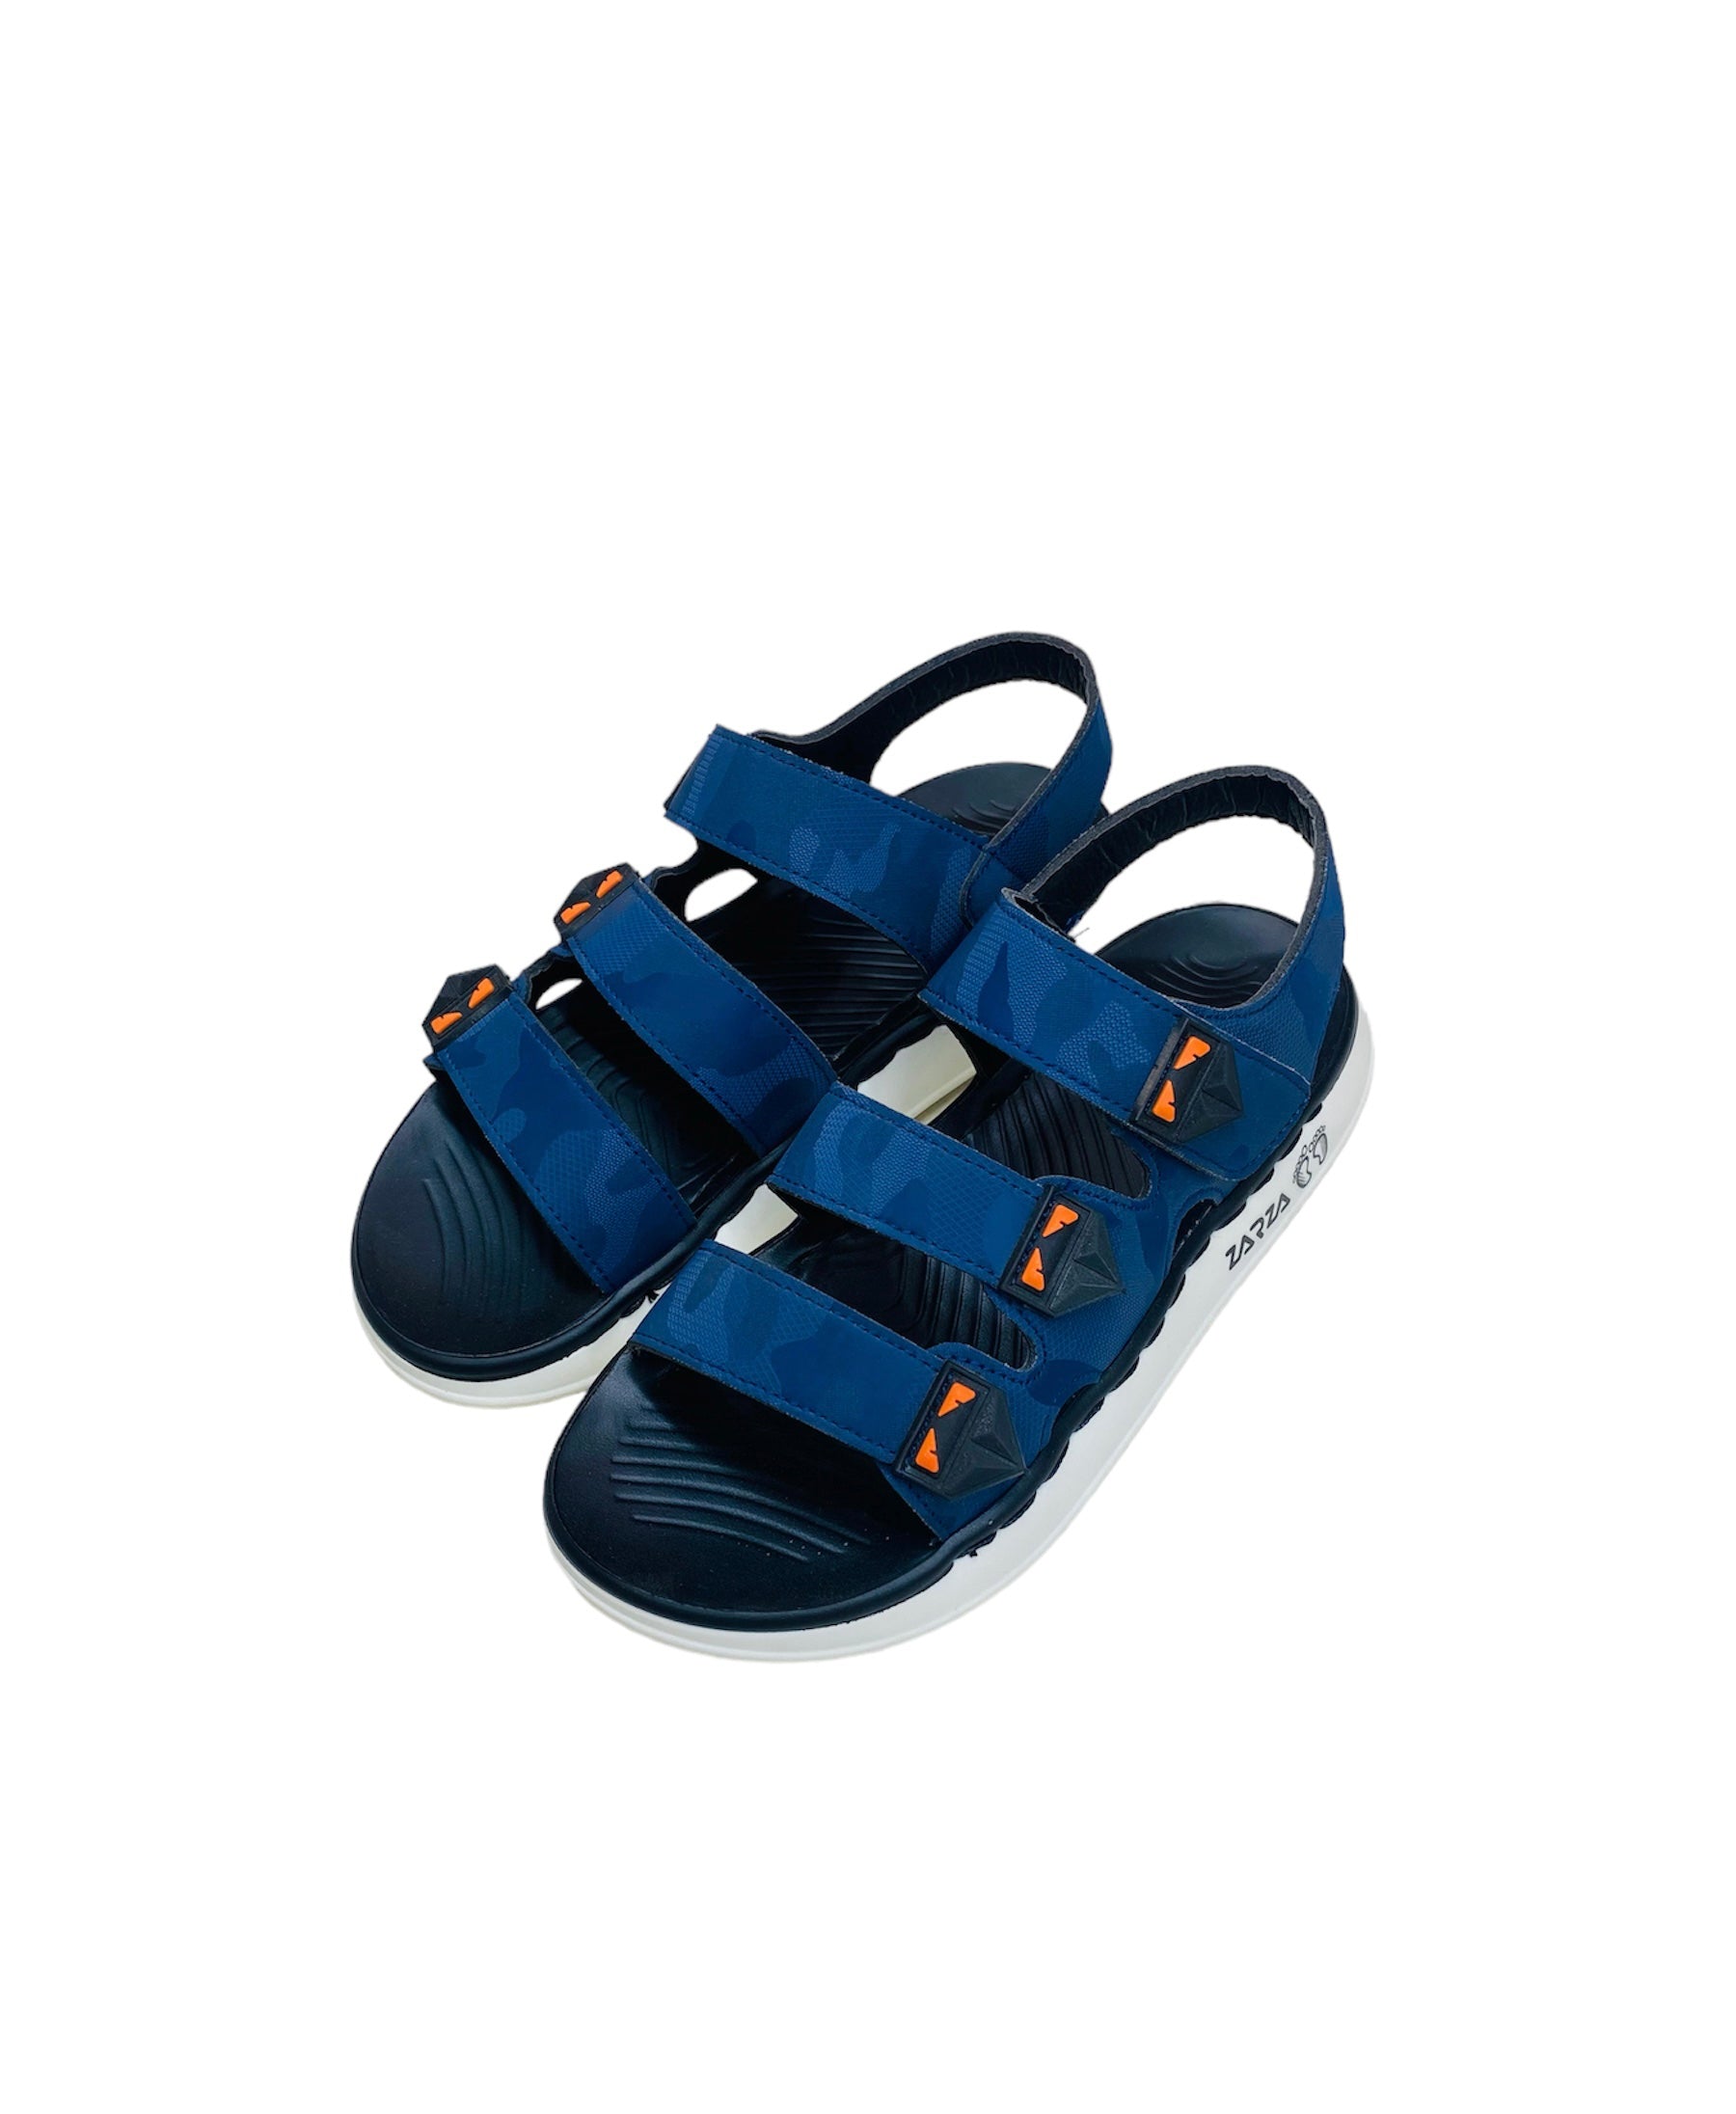 Blue Strap Sandal